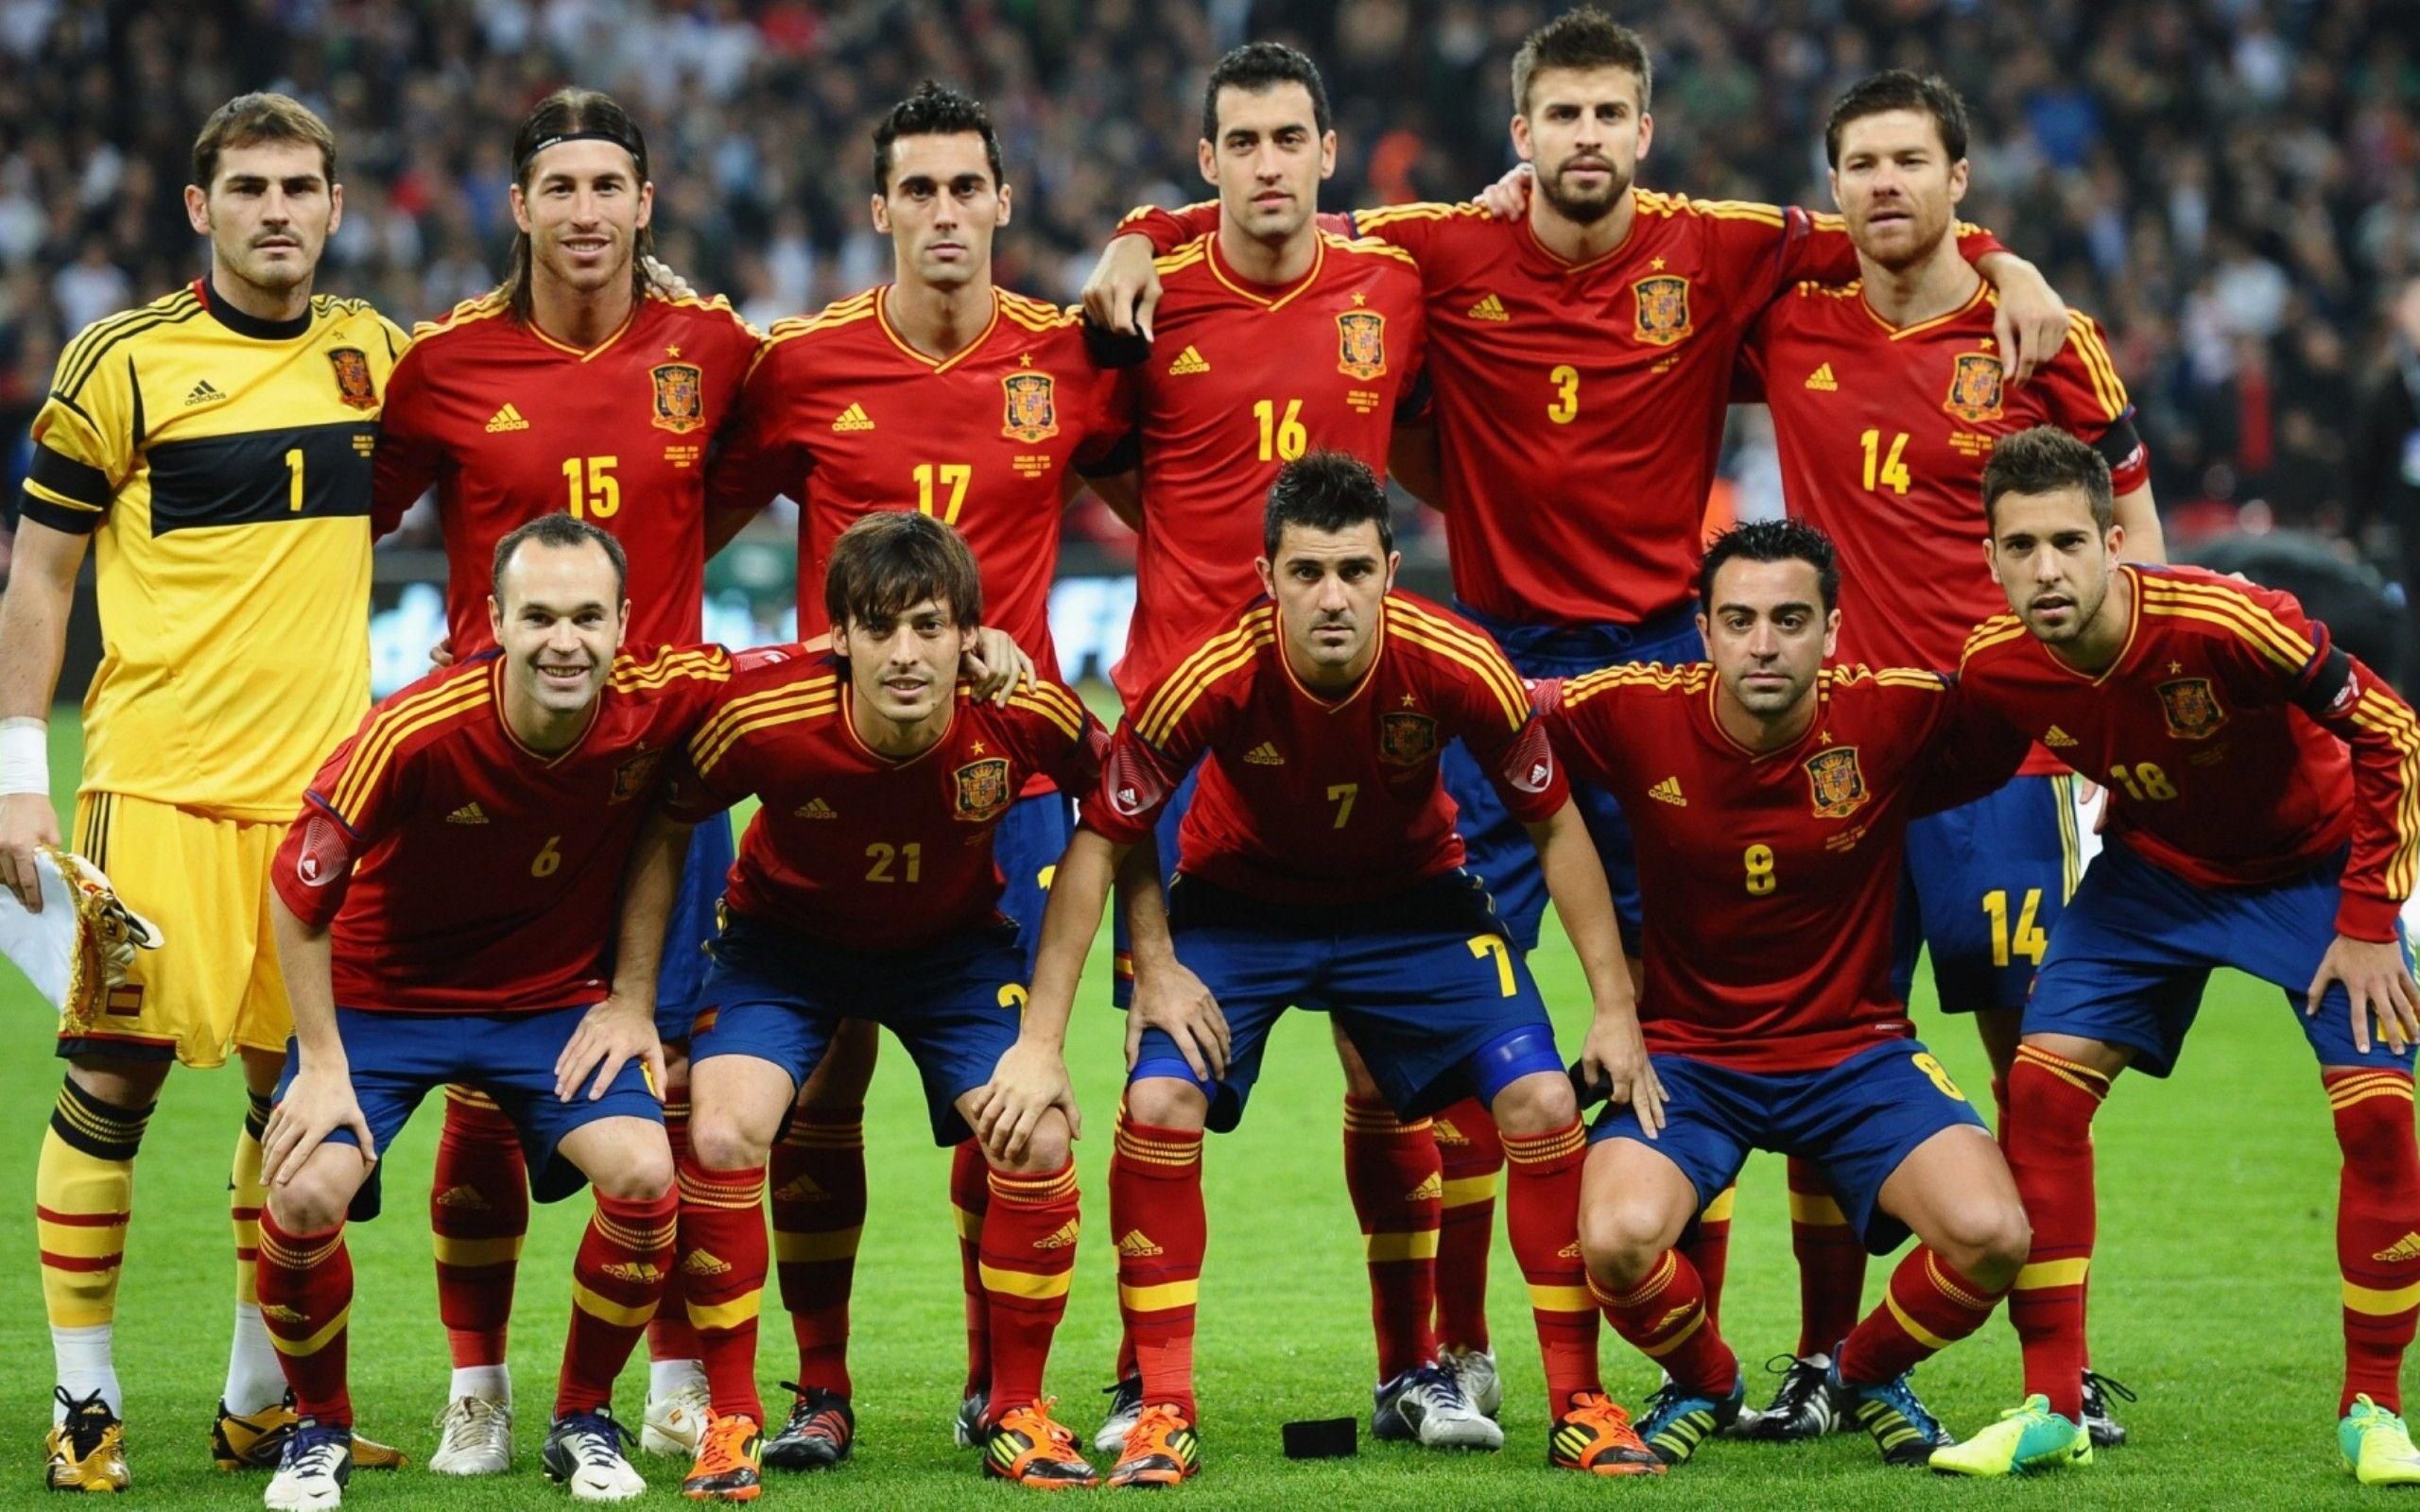 Spain Football Wallpaper. Spain Soccer Team Photo